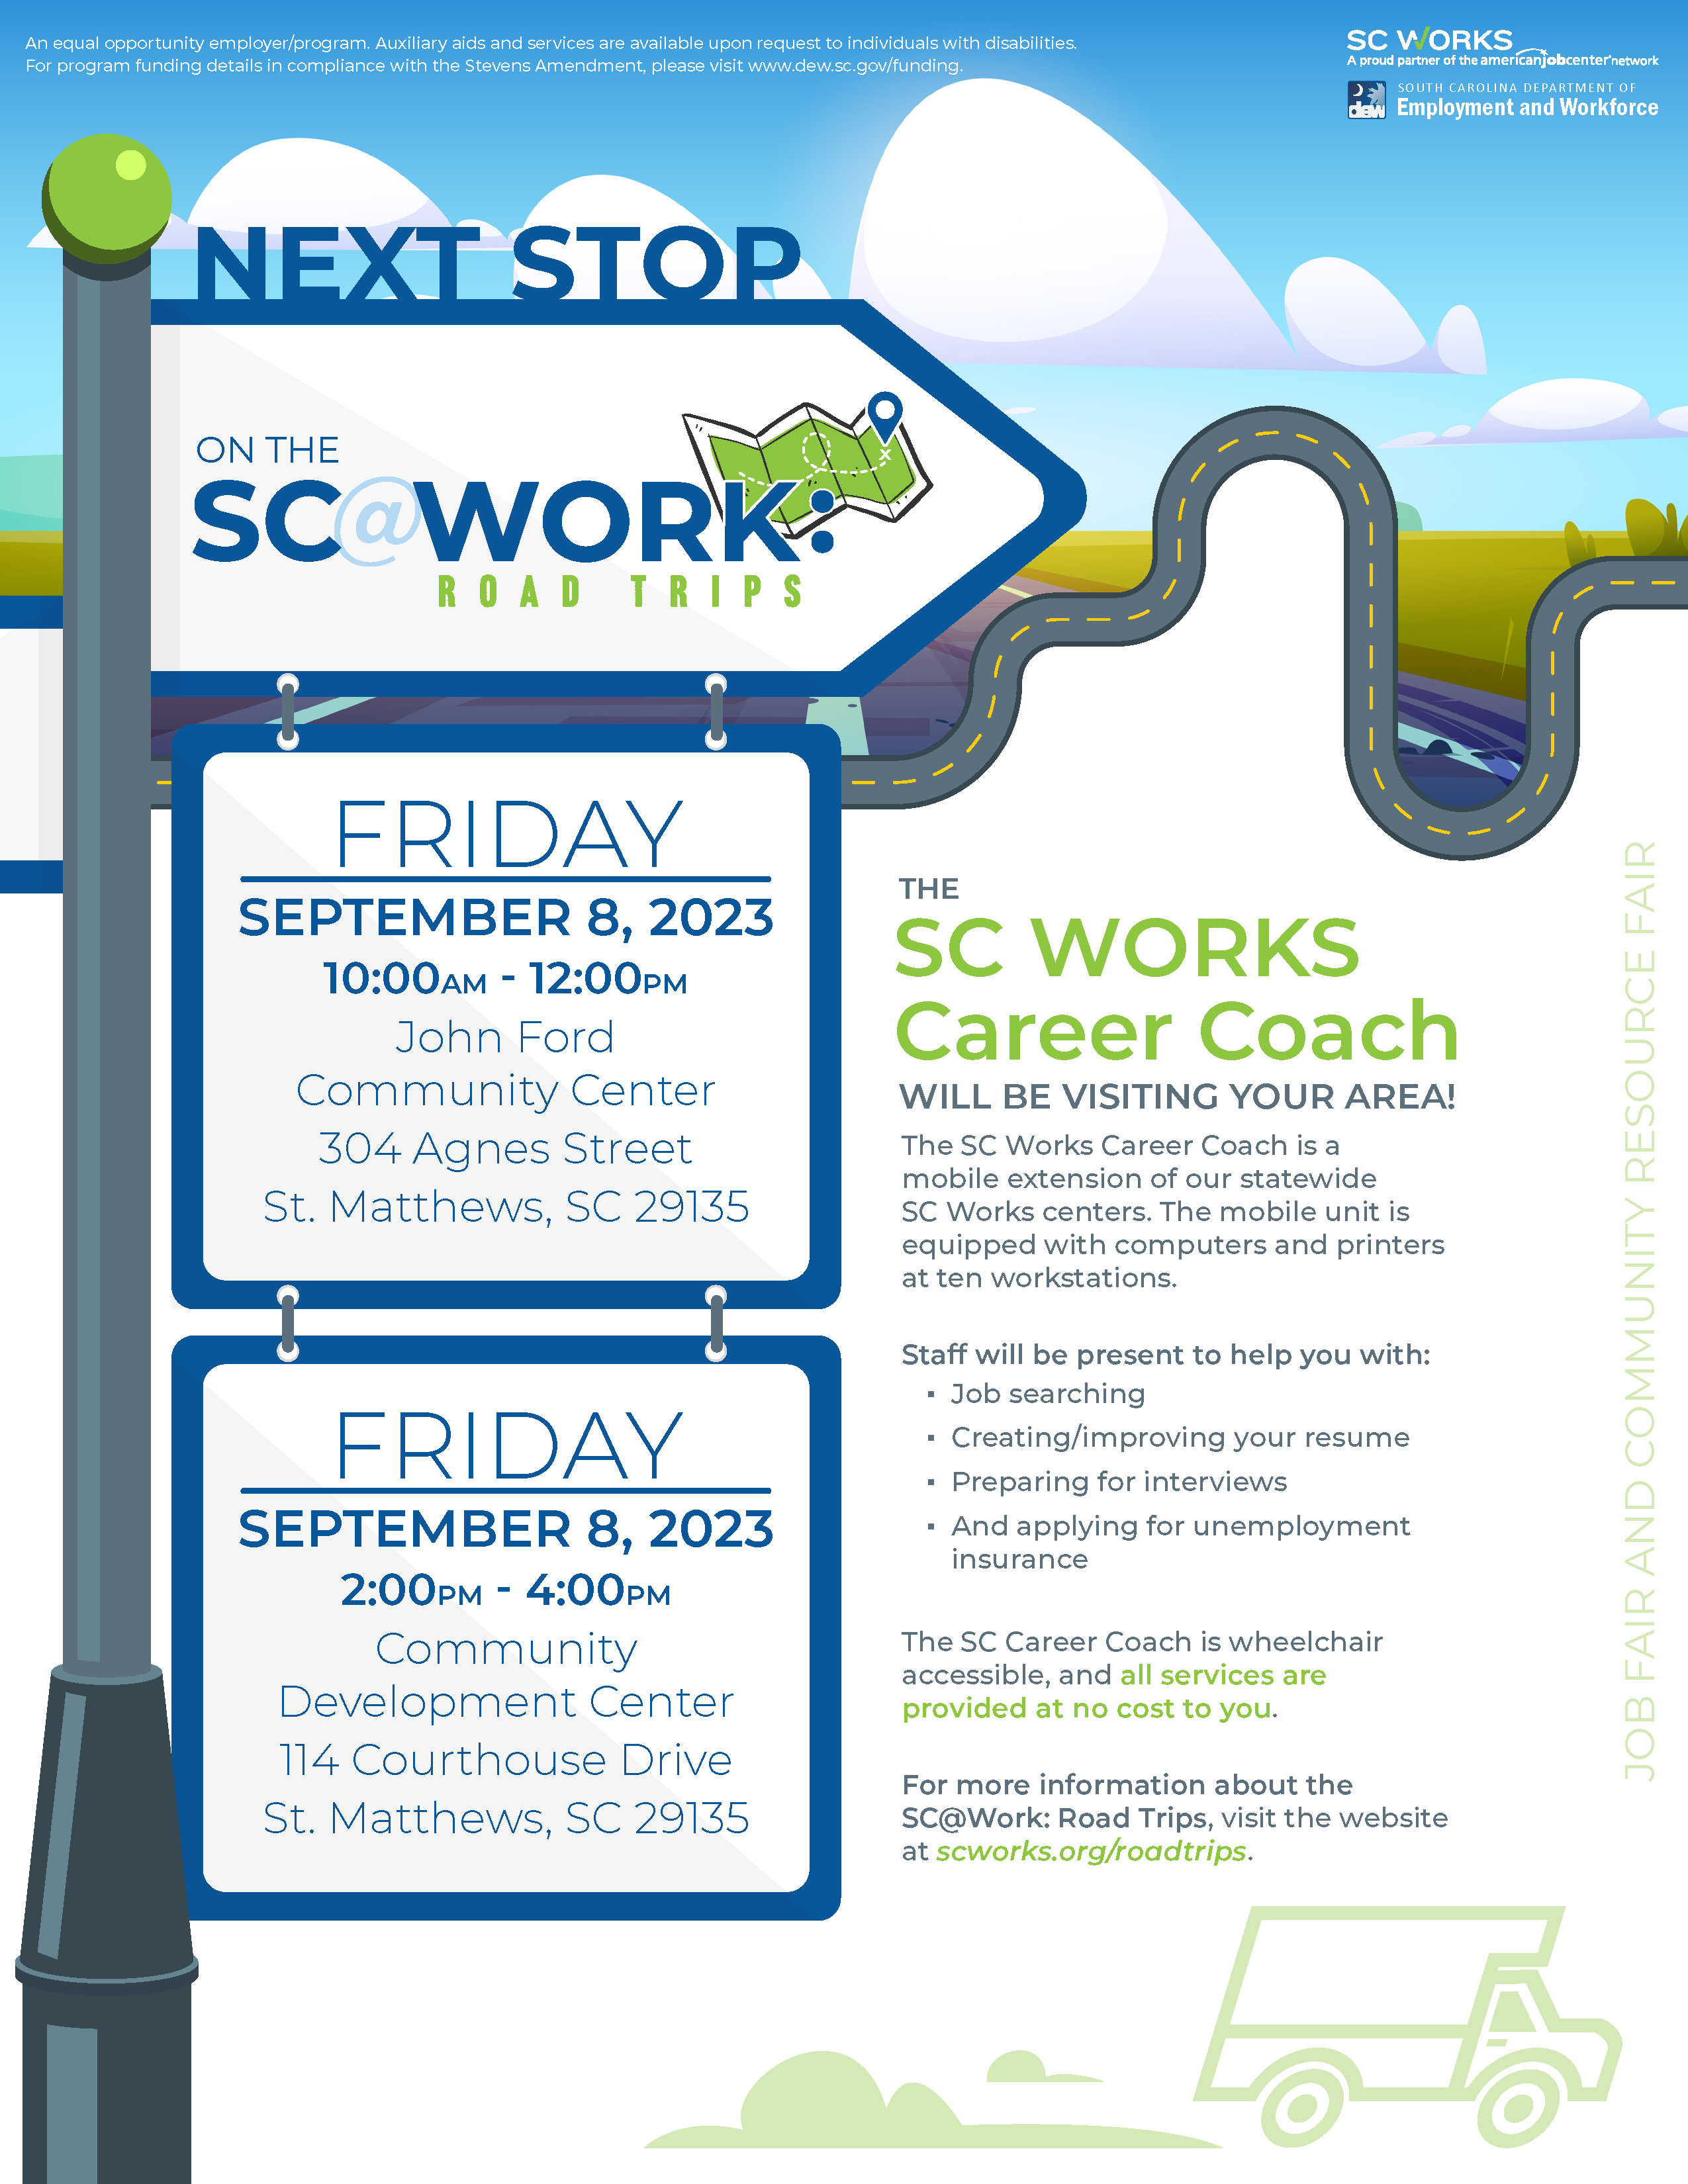 SC Works Career Coach - Coming Soon!